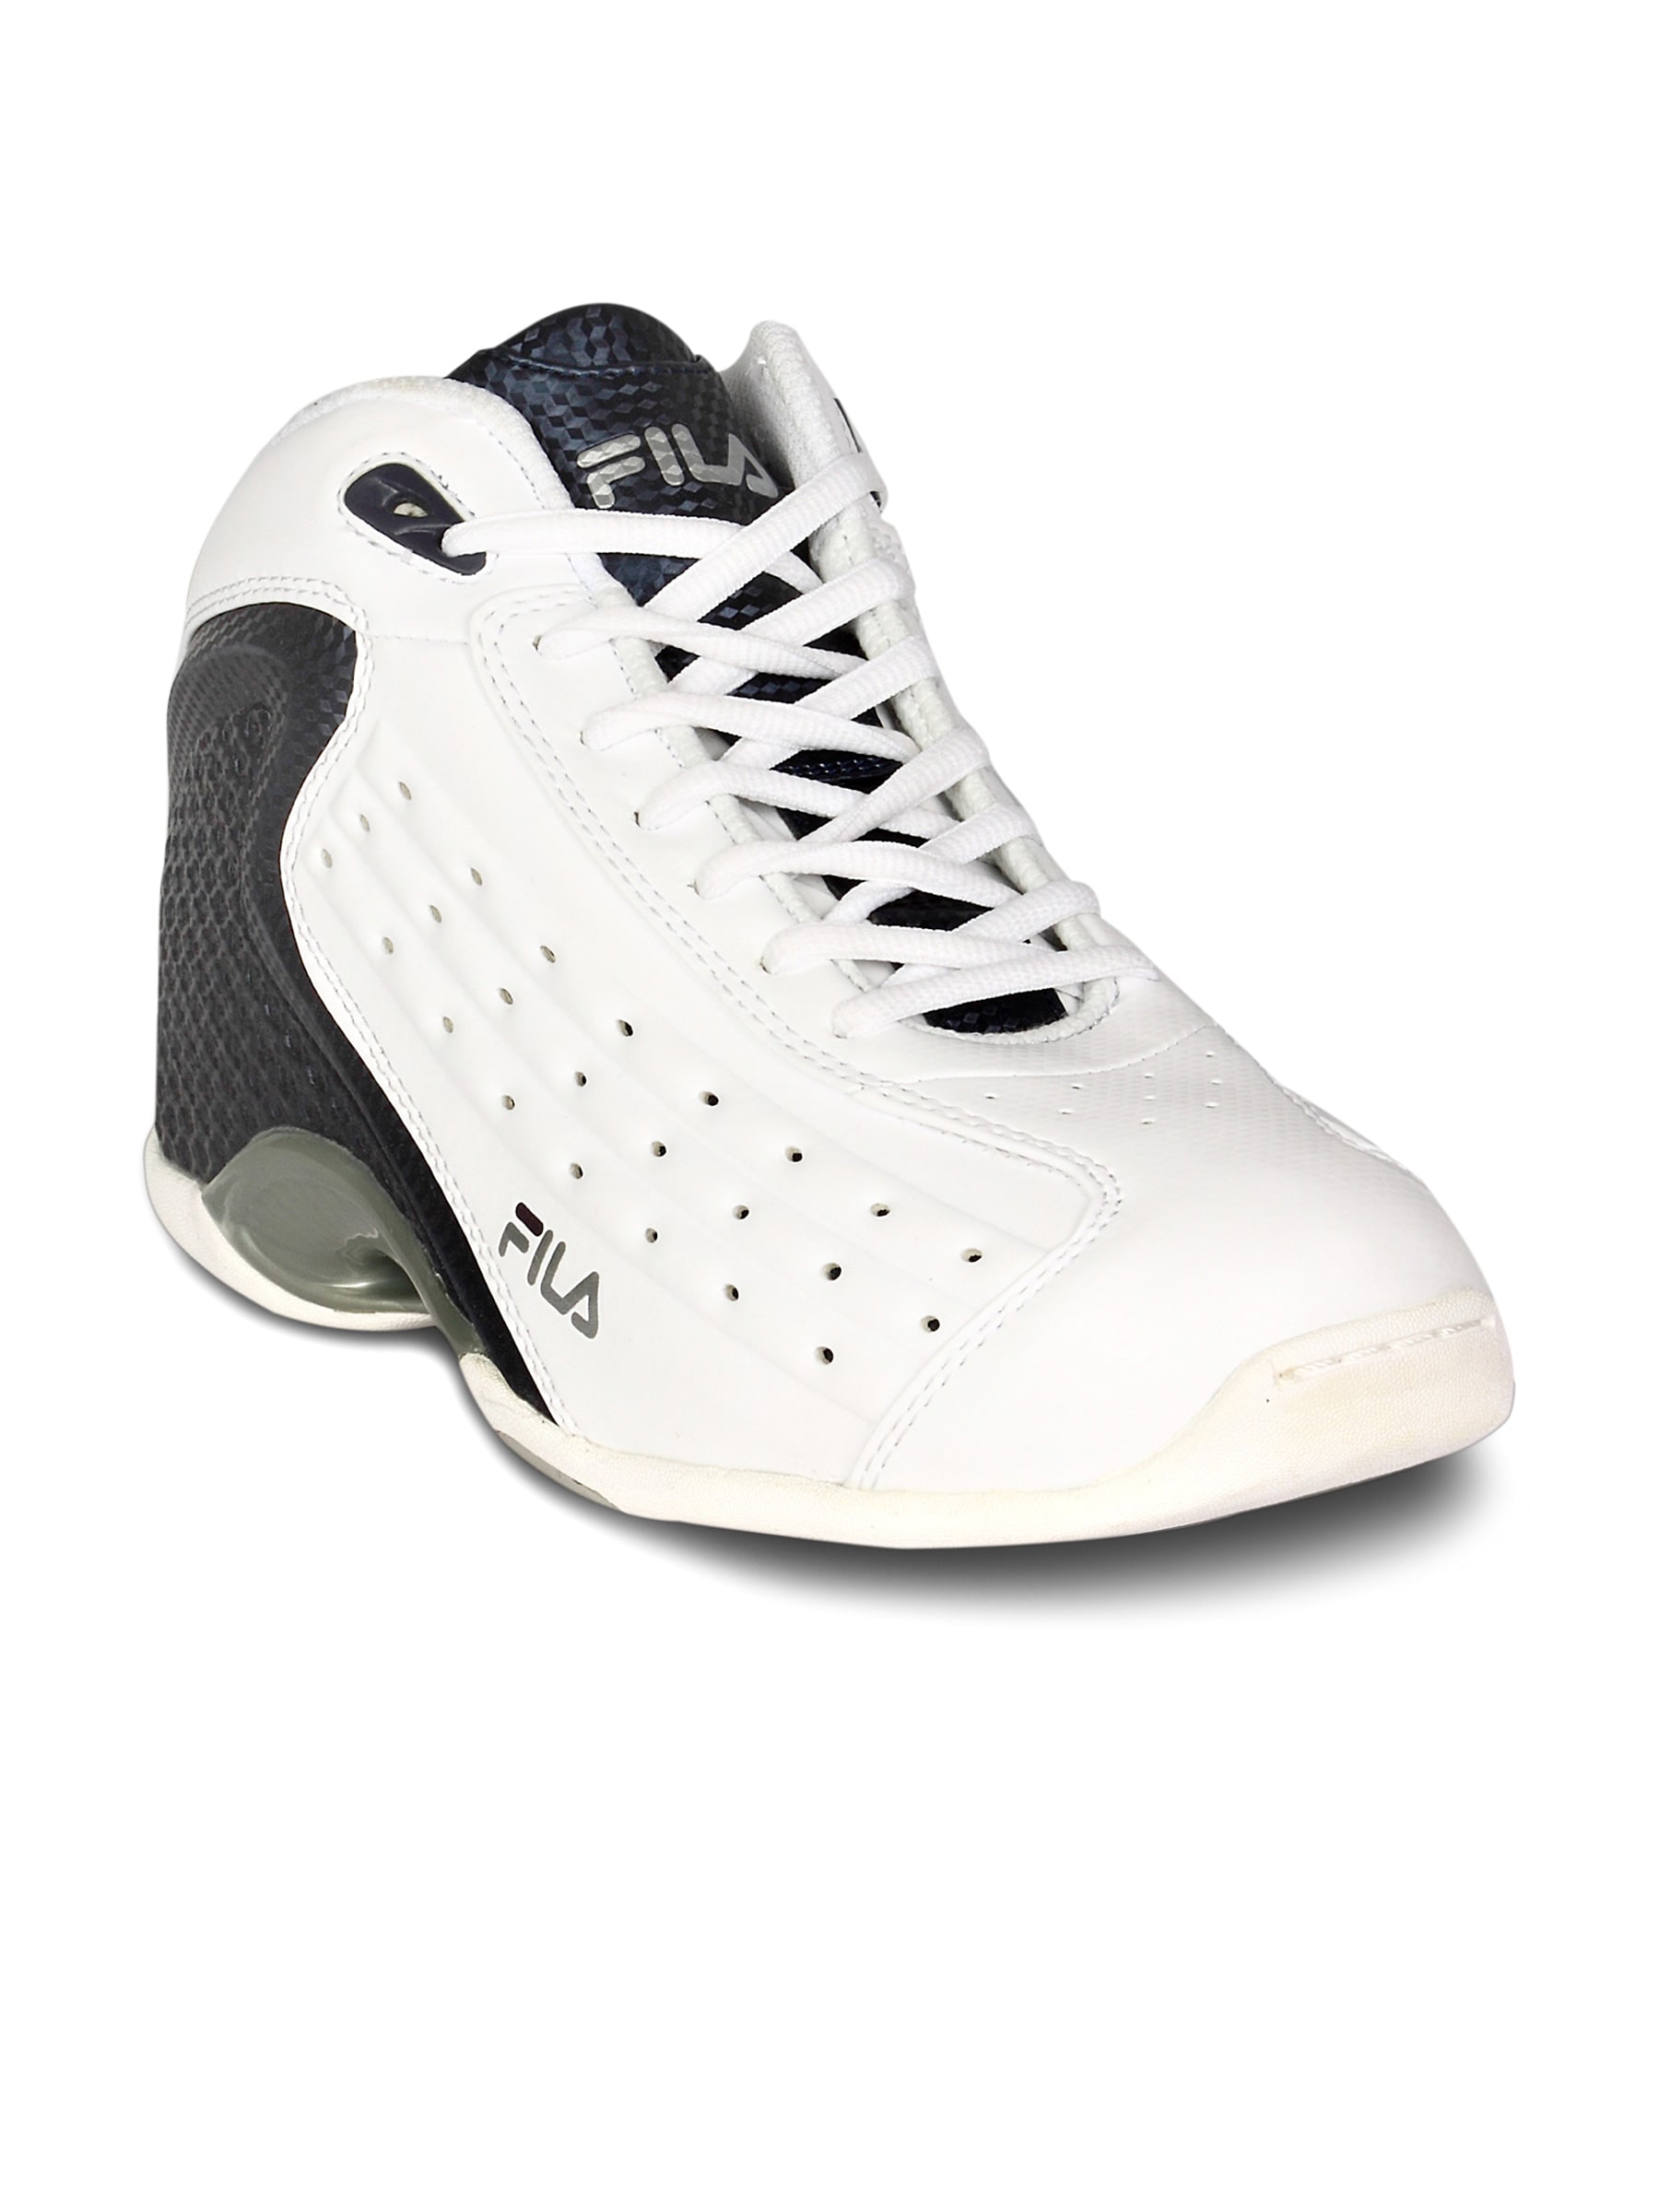 Fila Men's Skills White Navy Shoe